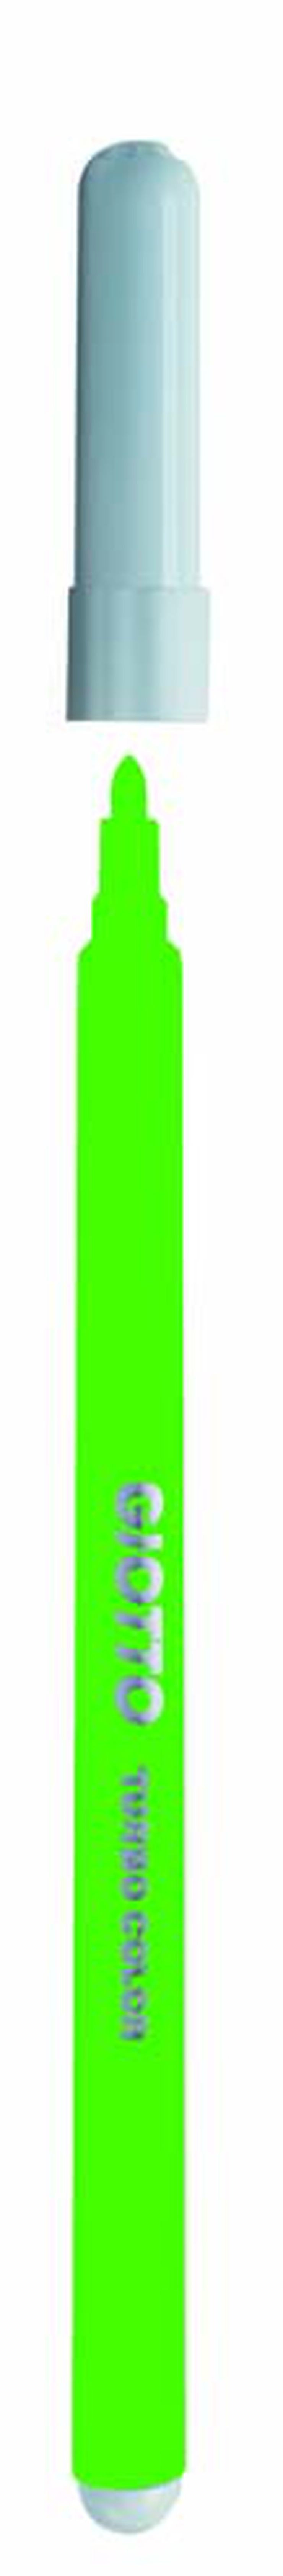 Rotulador Giotto Turbo Color verde claro 12u